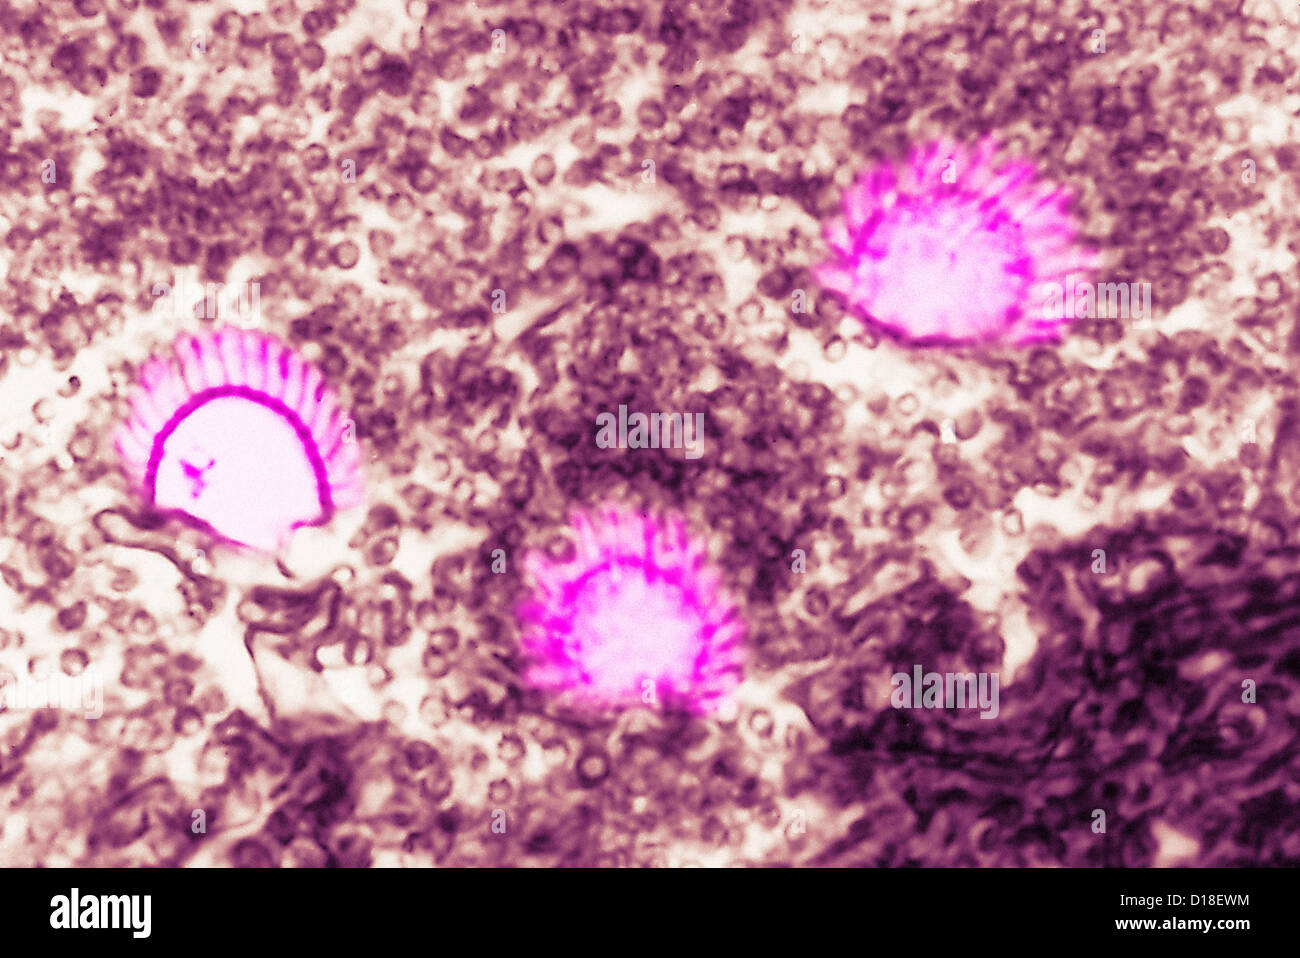 light micrograph,  pulmonary aspergillosis Stock Photo